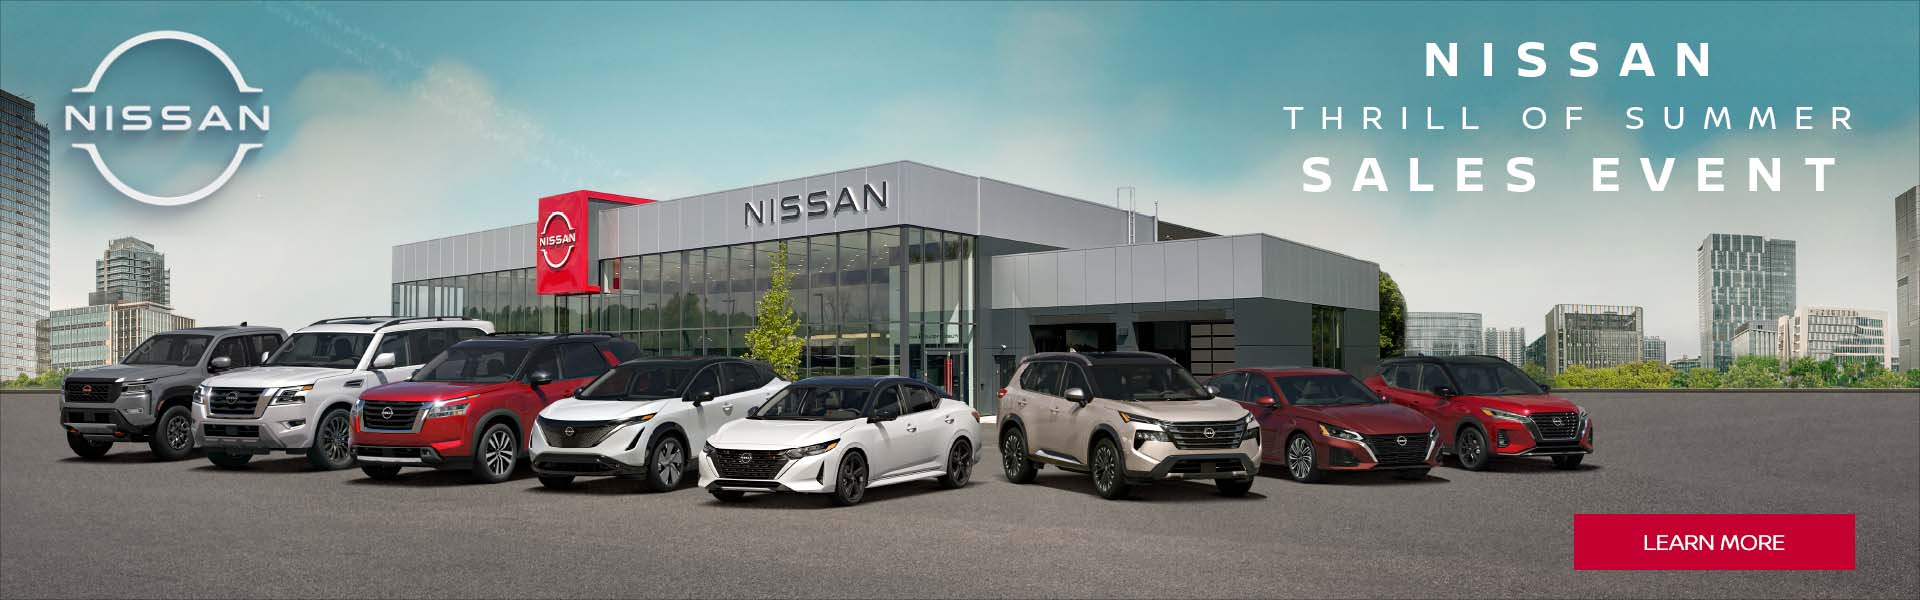 Nissan Thrill of Summer Sales Event